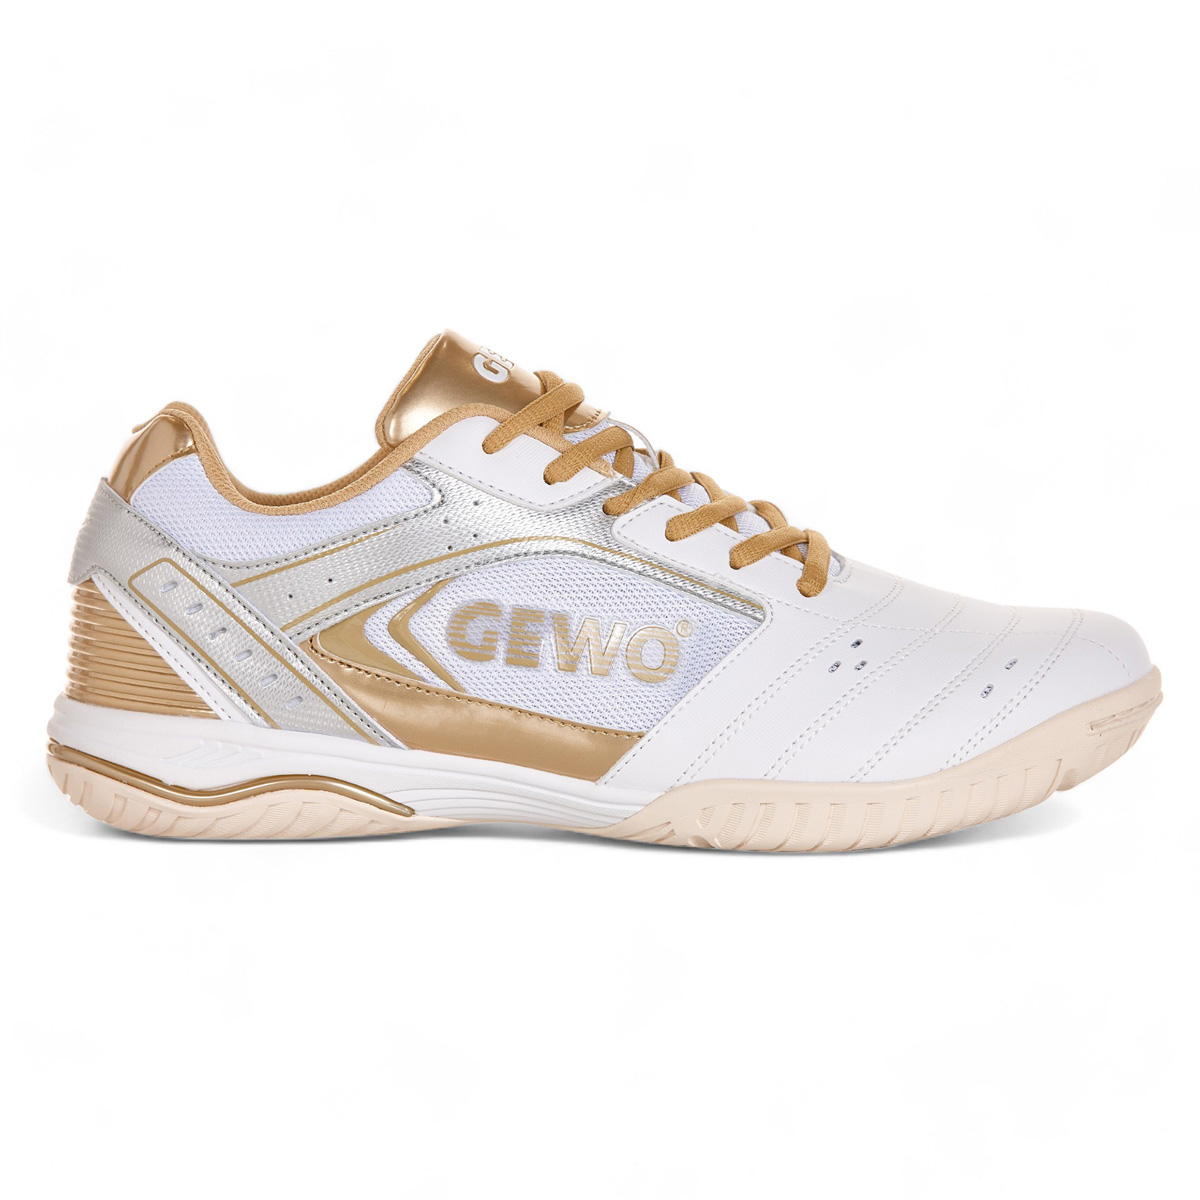 GEWO Shoe Gold Flex white/gold 39